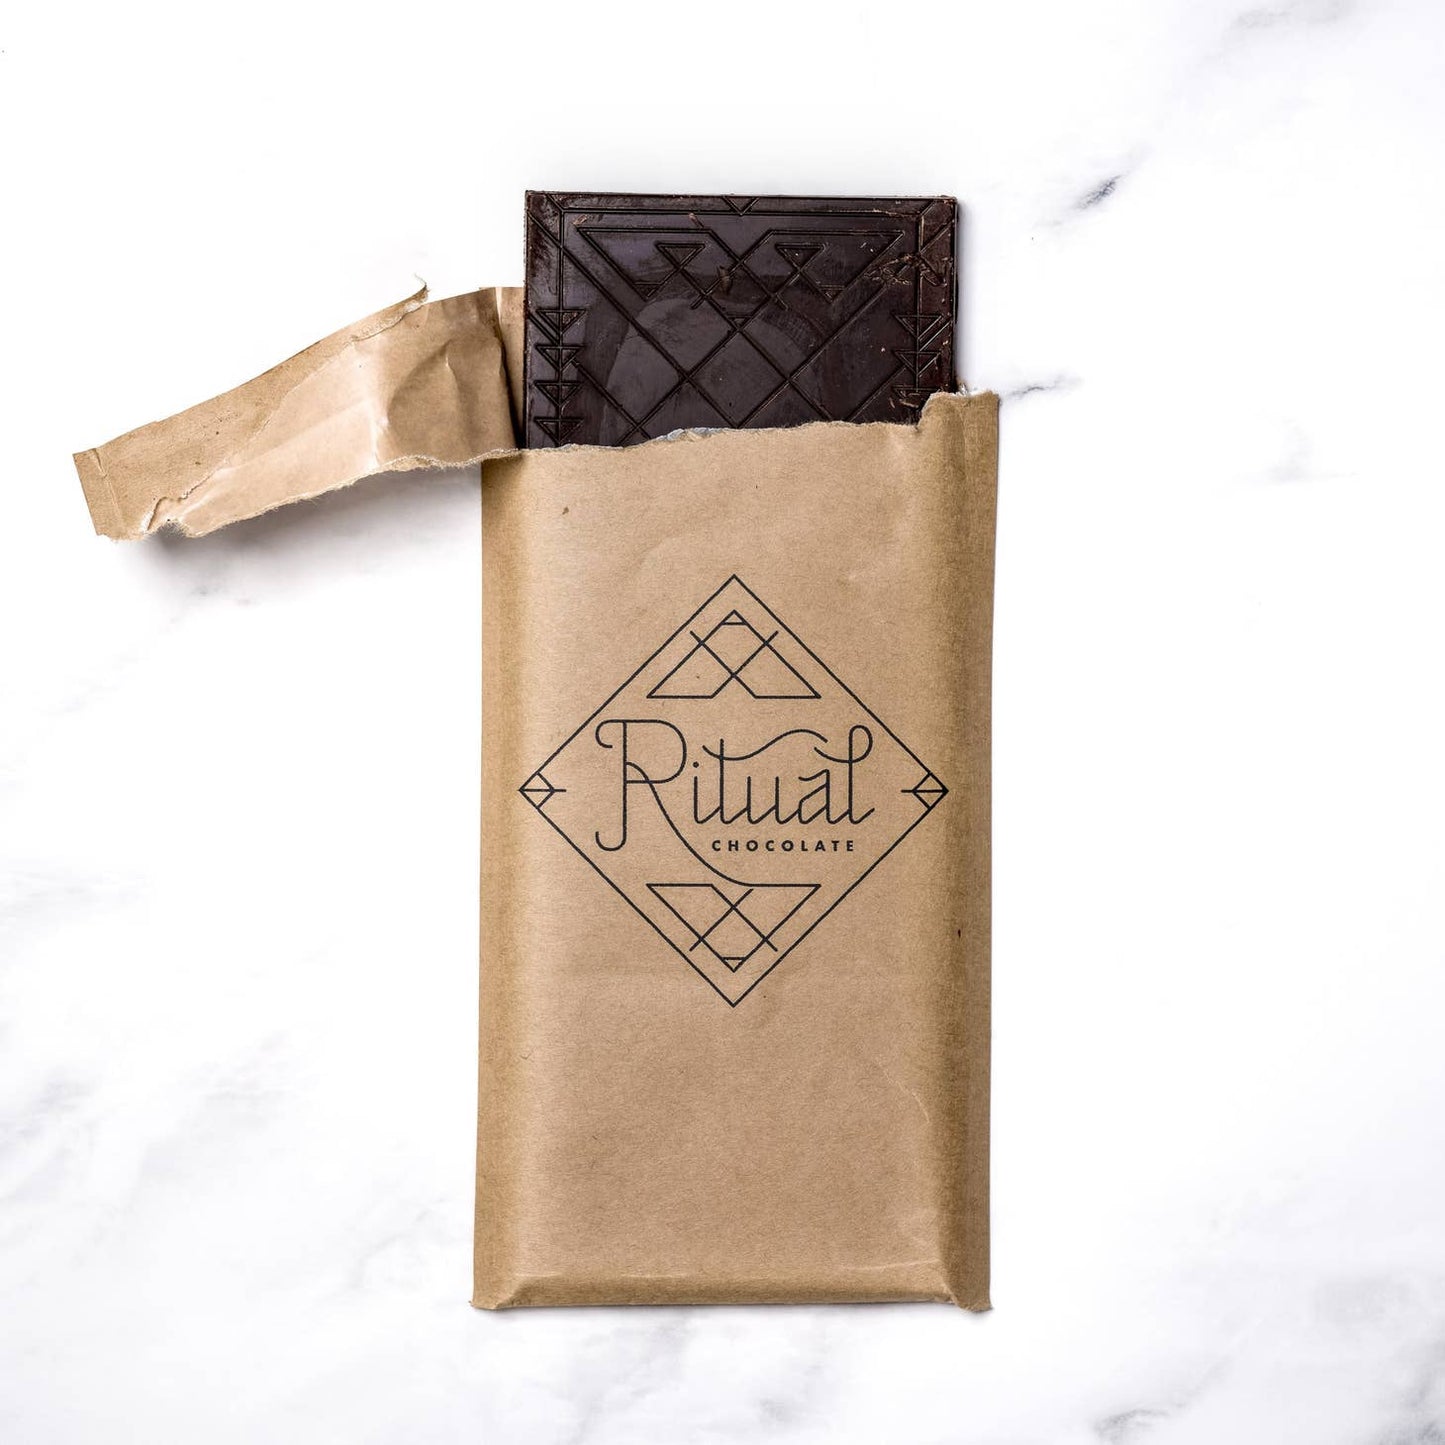 Ritual Chocolate - Dark Mocha Chocolate, 70% Cacao